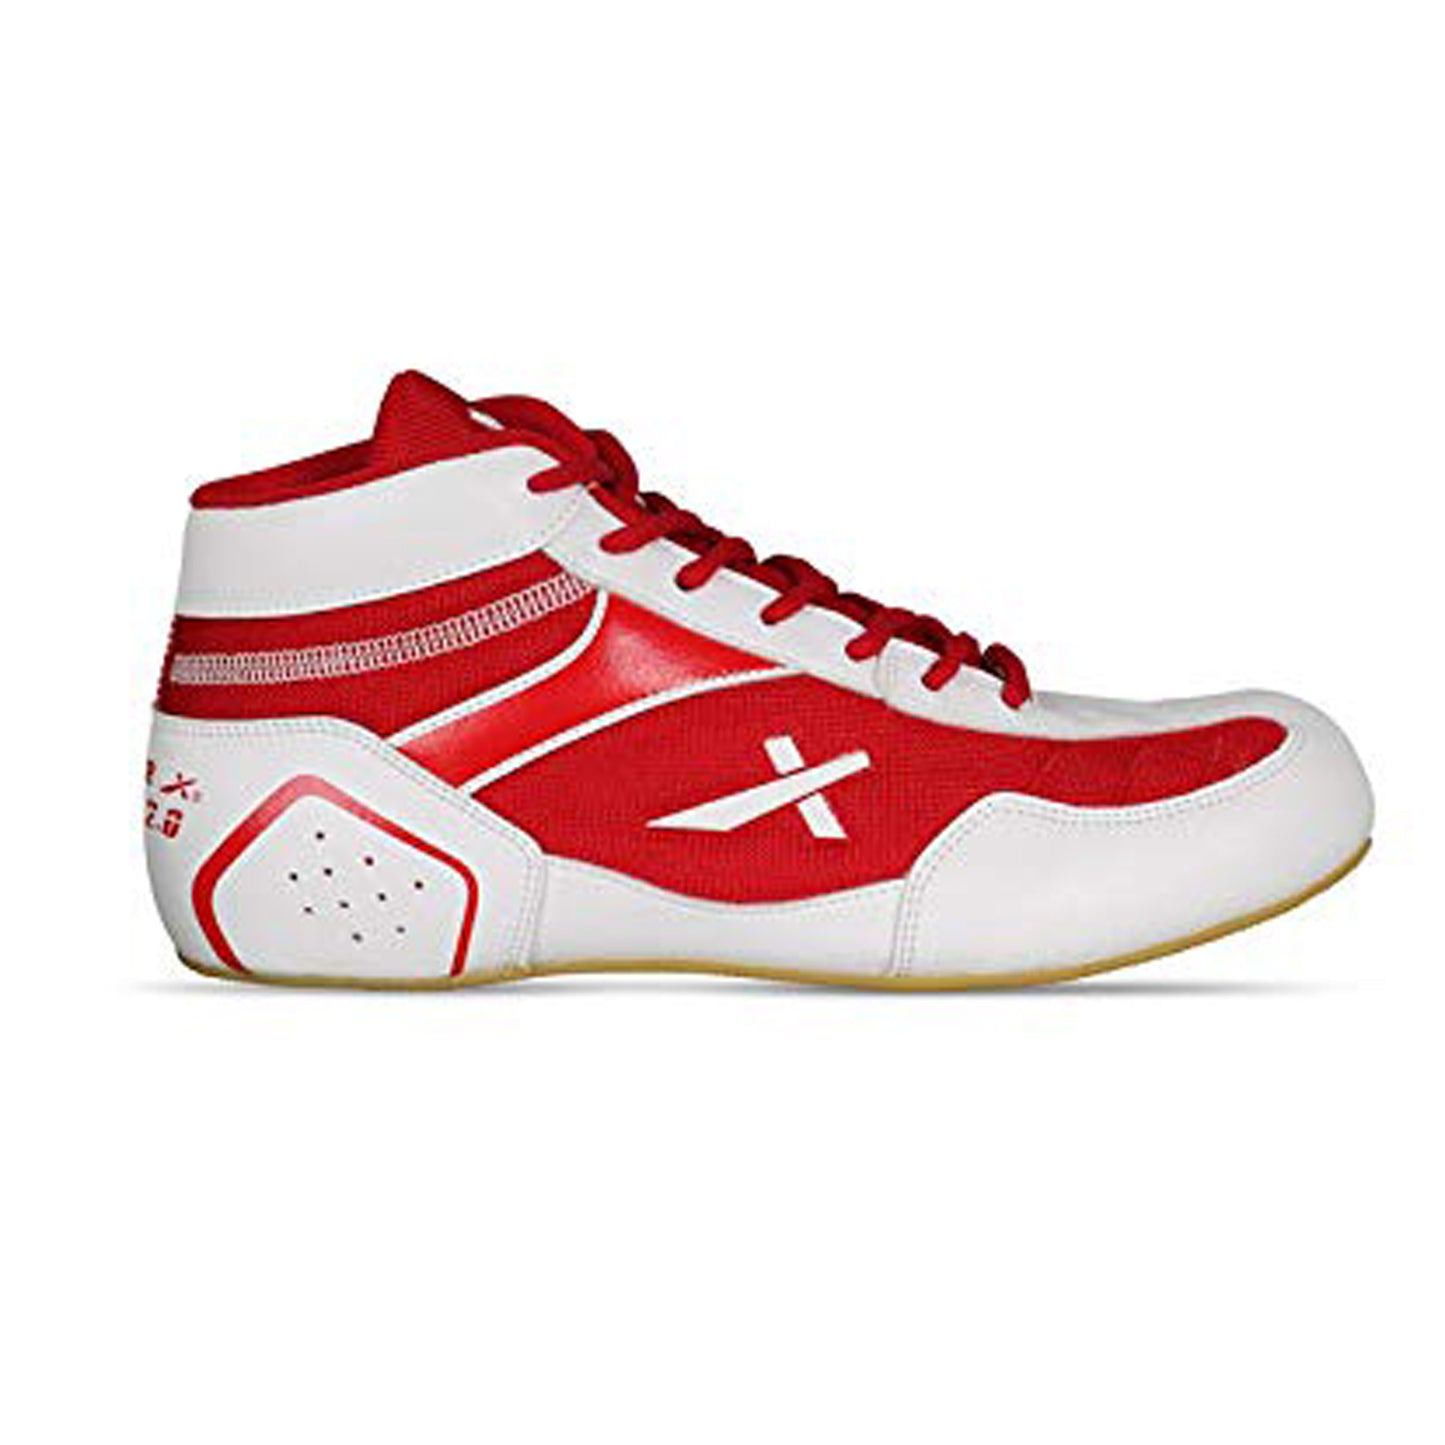 Vector X Razor 2.0 Kabaddi Shoes for Men, Red/White - Best Price online Prokicksports.com